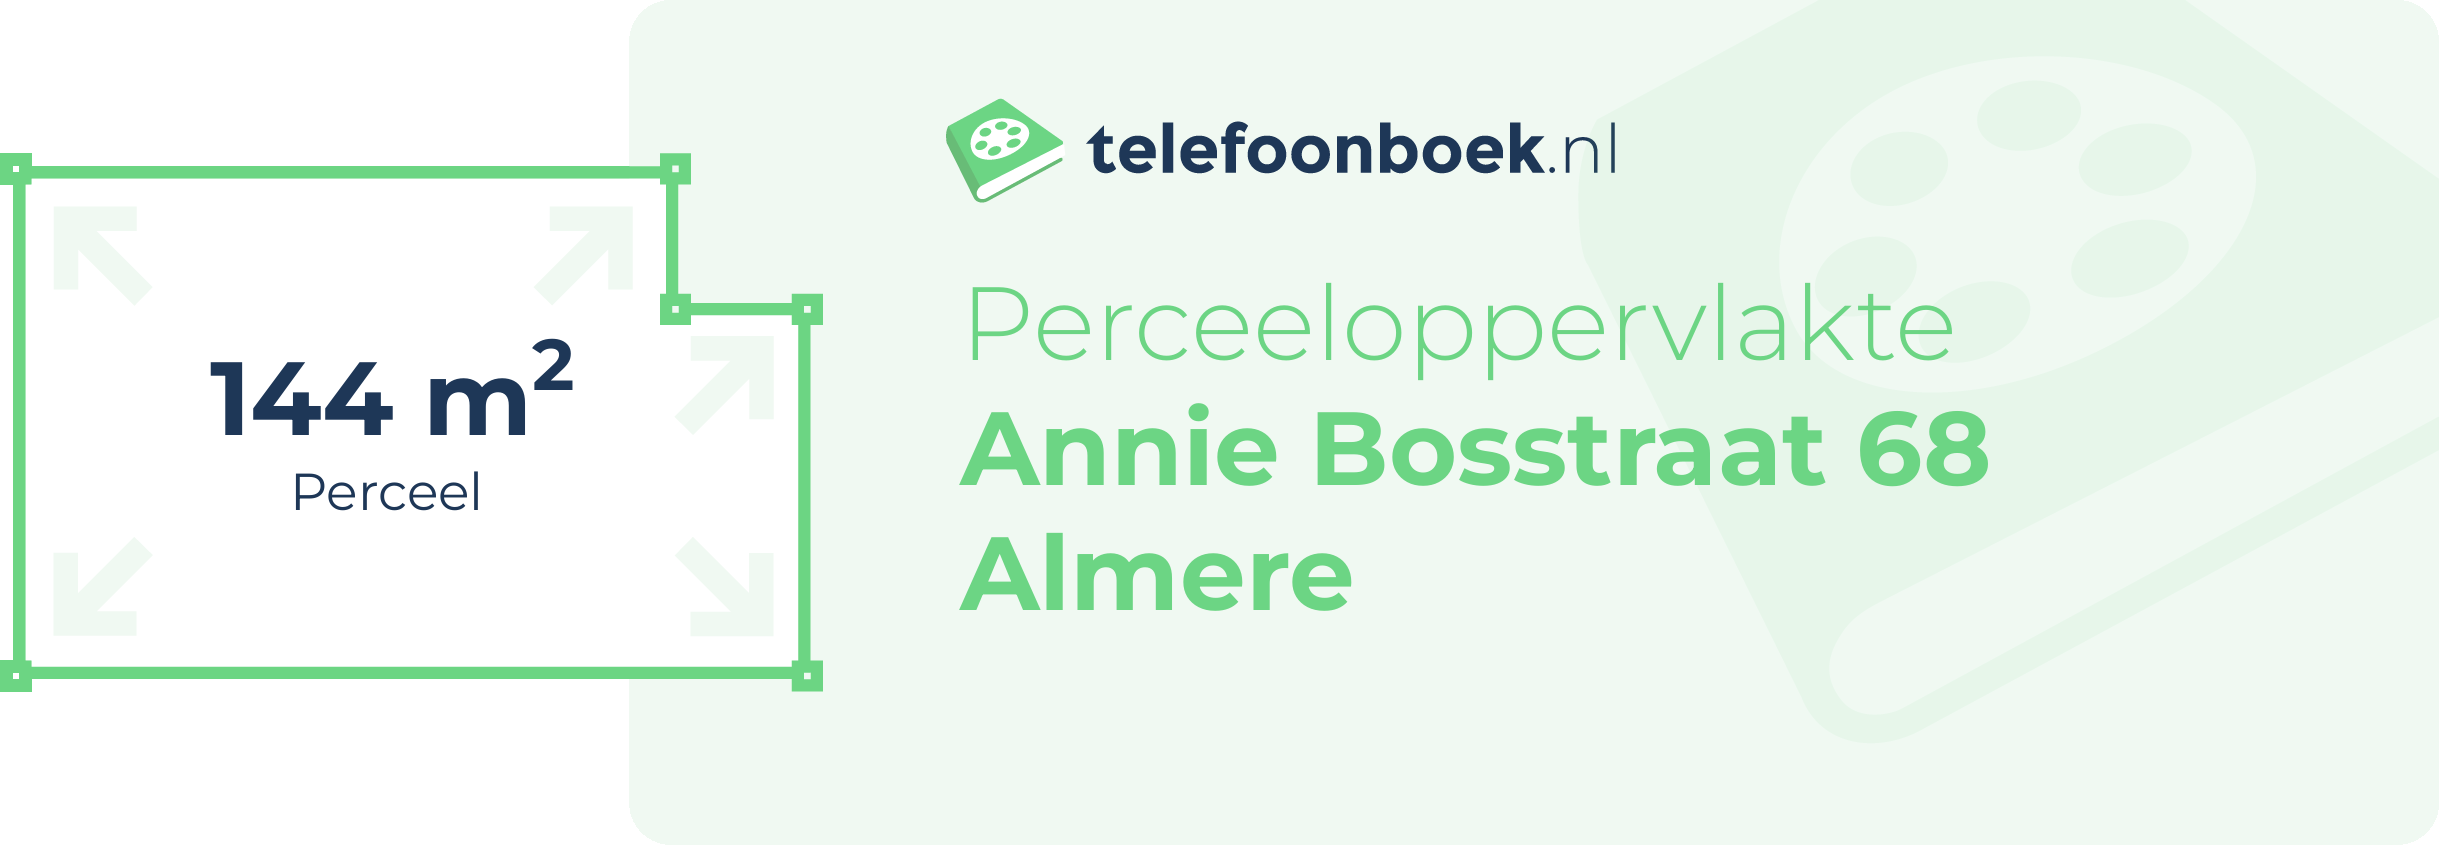 Perceeloppervlakte Annie Bosstraat 68 Almere